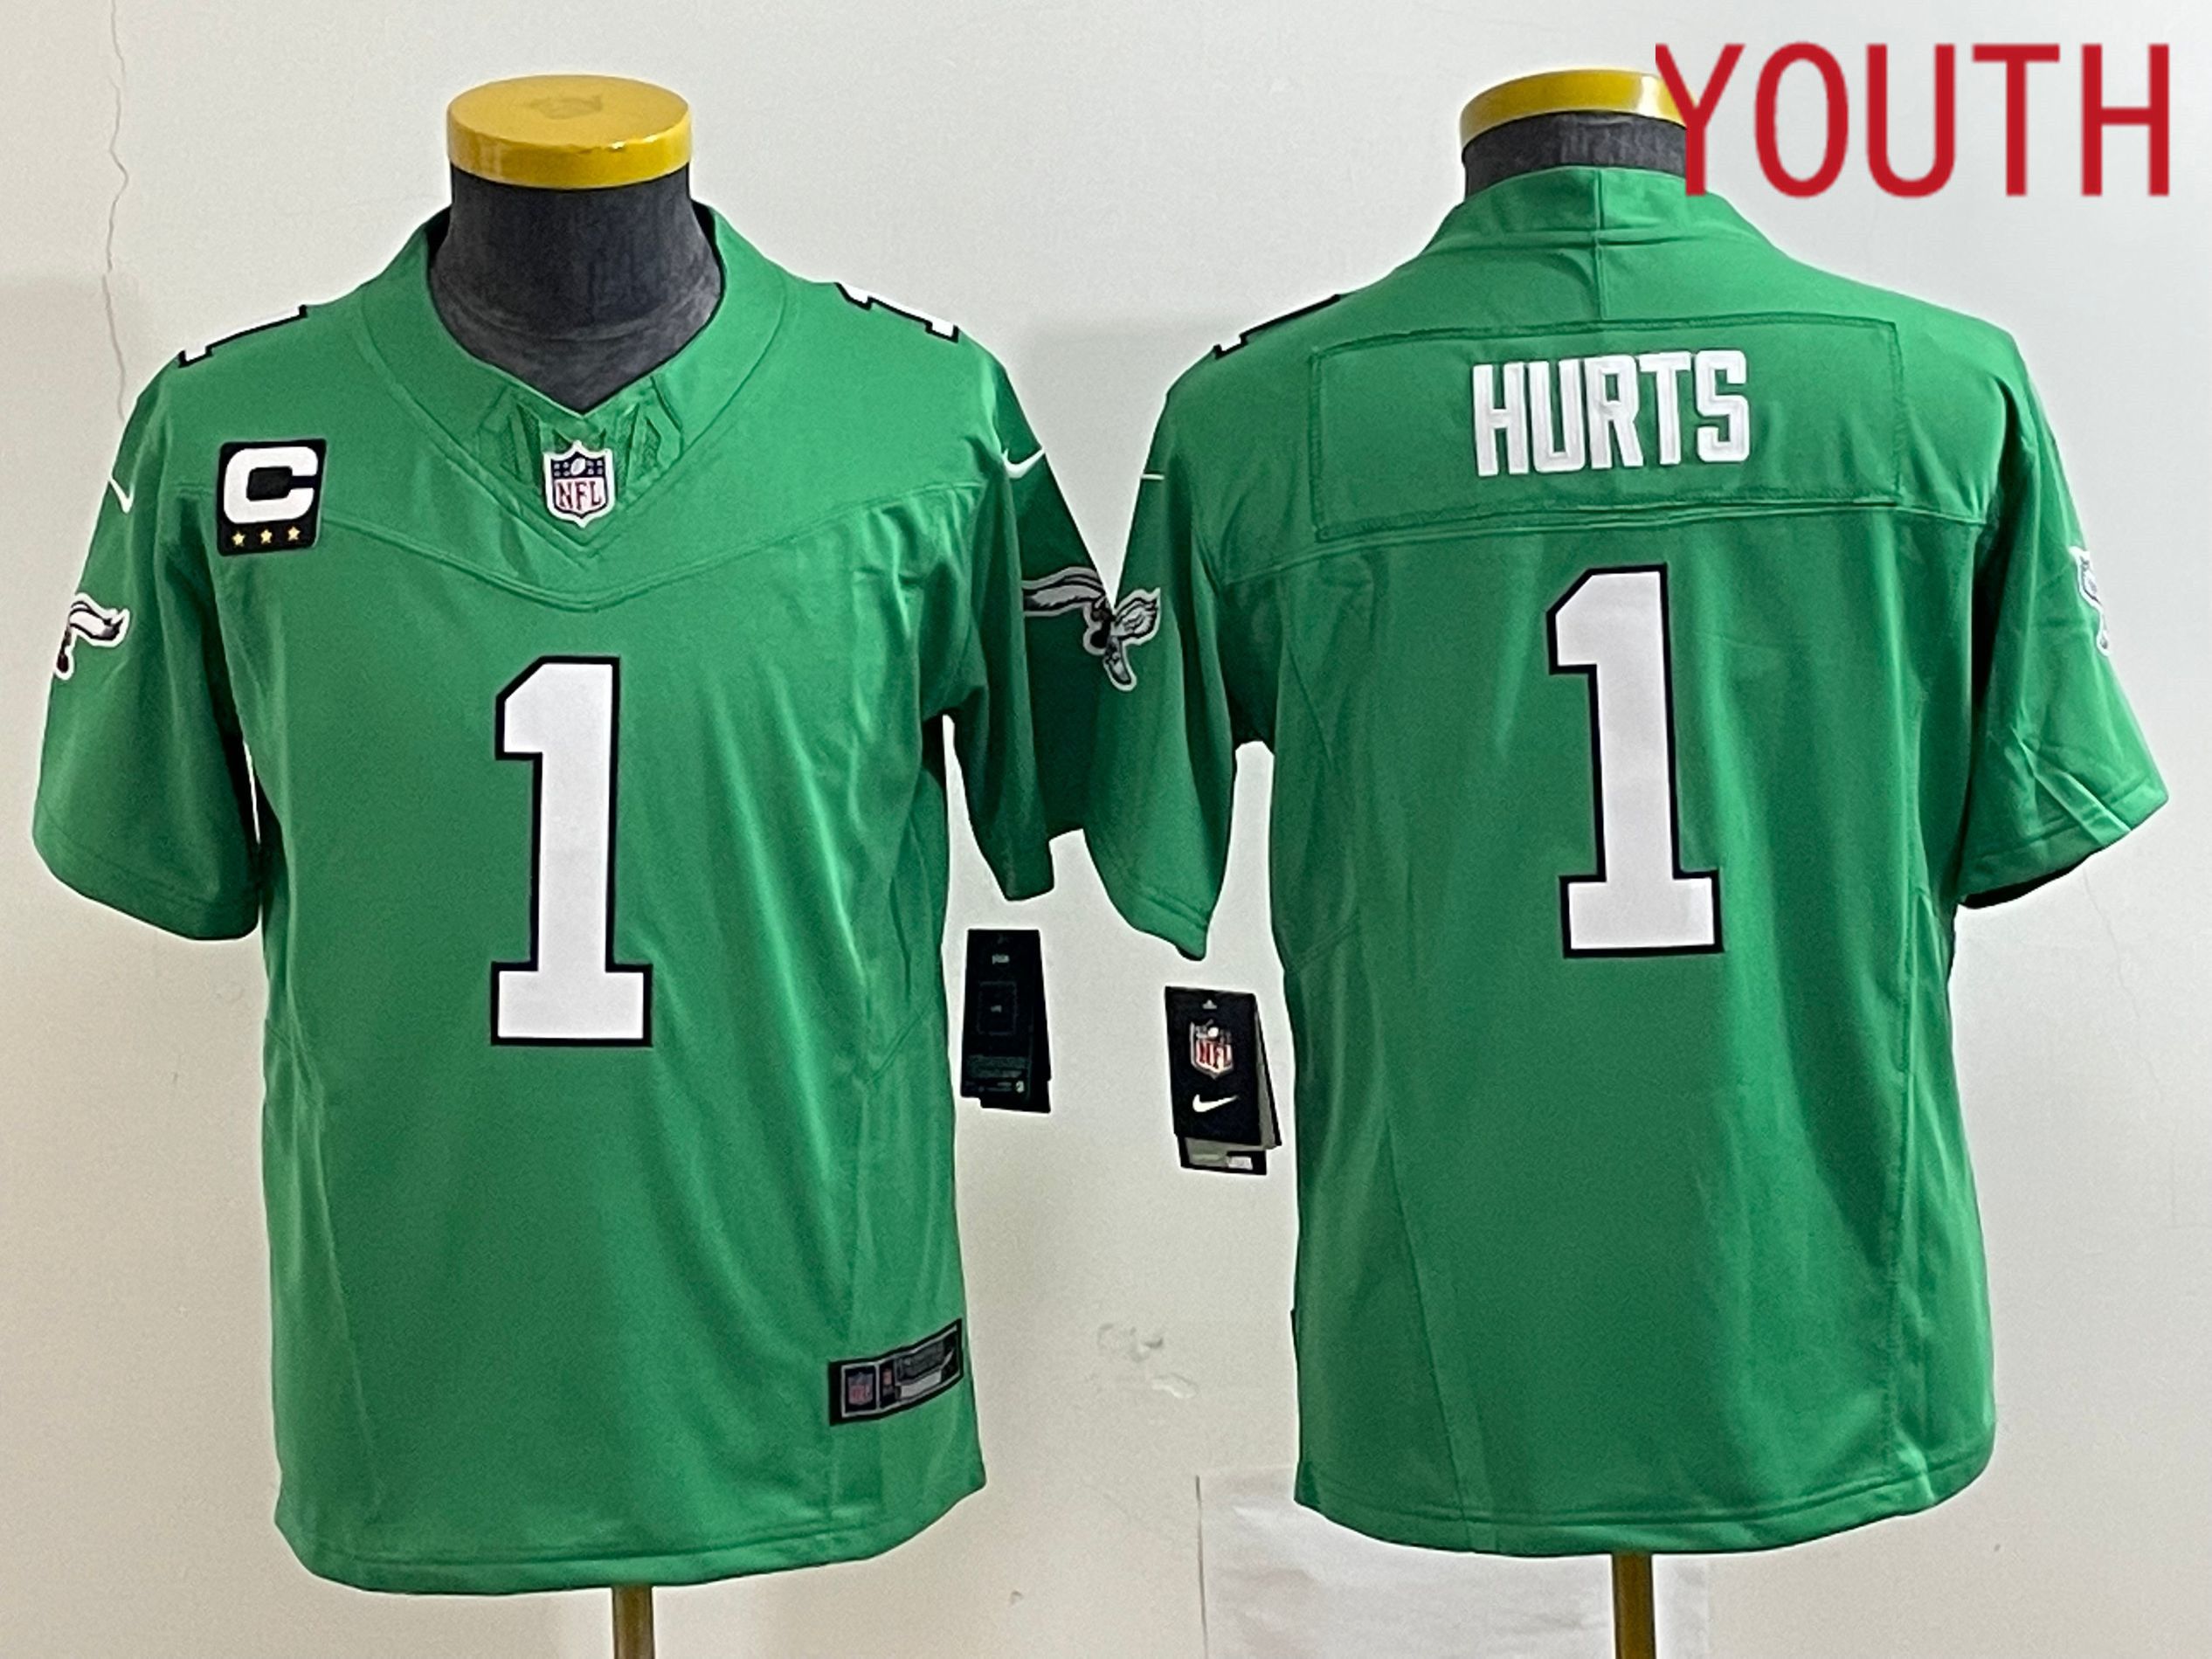 Youth Philadelphia Eagles #1 Hurts Green Nike Throwback Vapor Limited NFL Jerseys